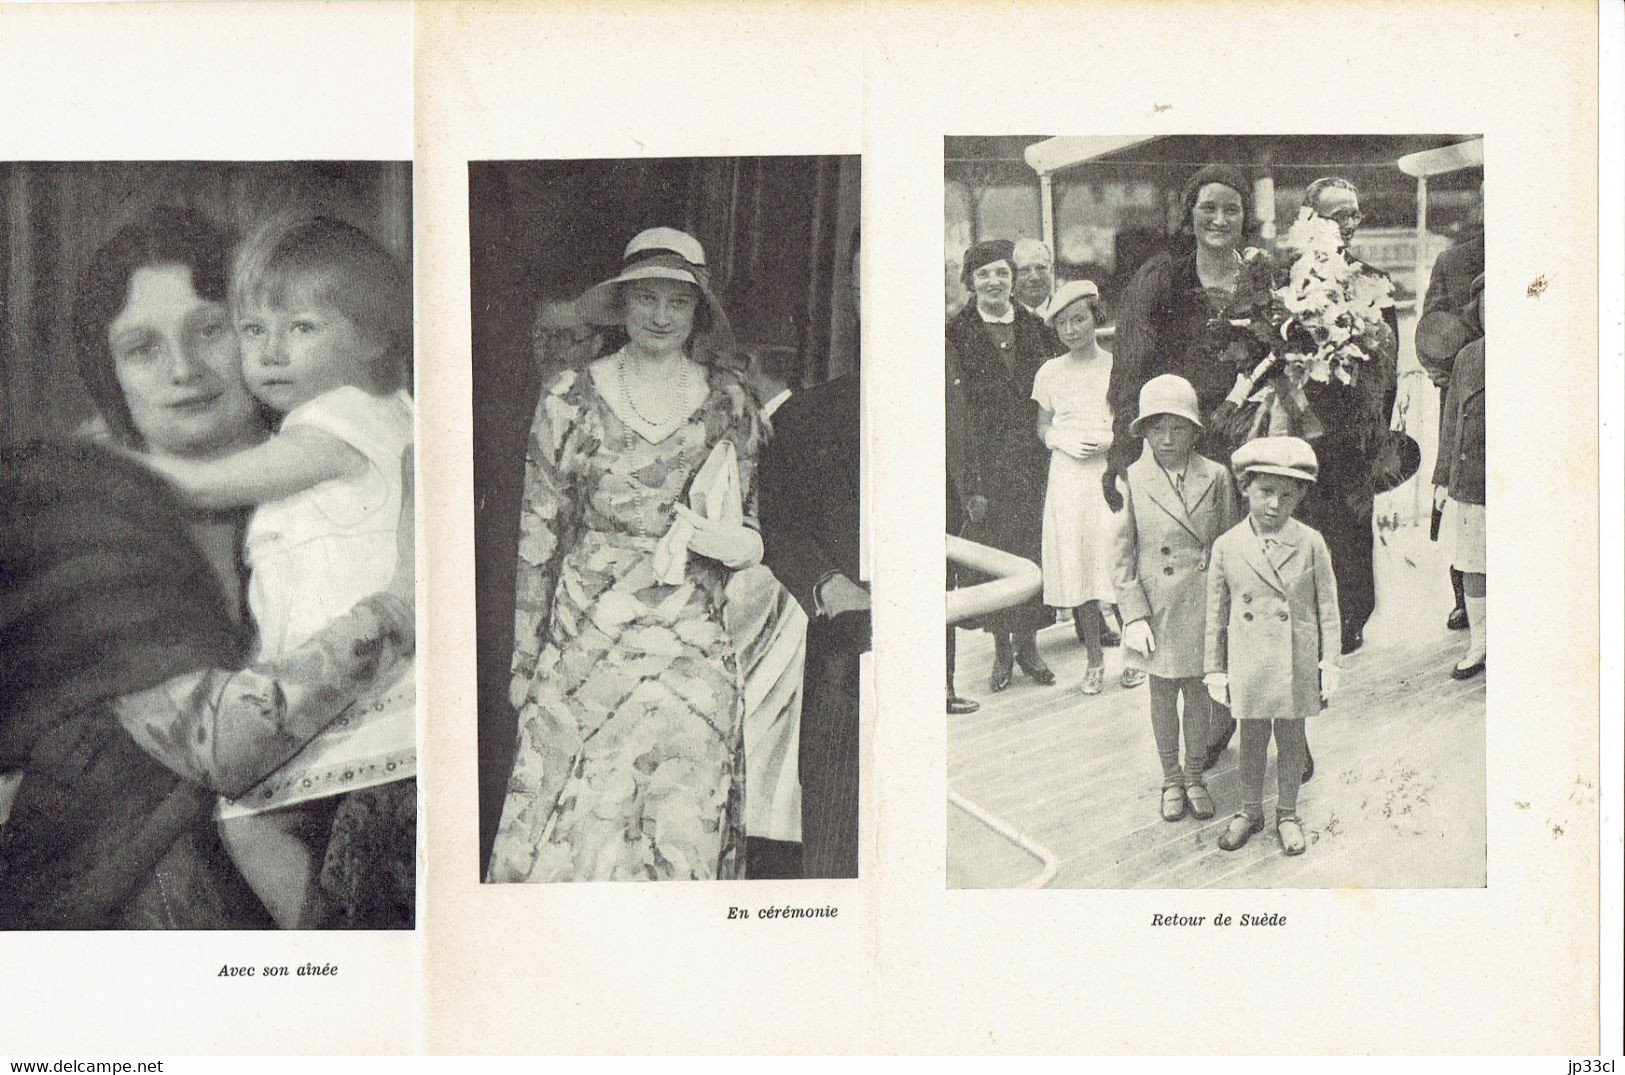 La Reine Astrid en 30 images